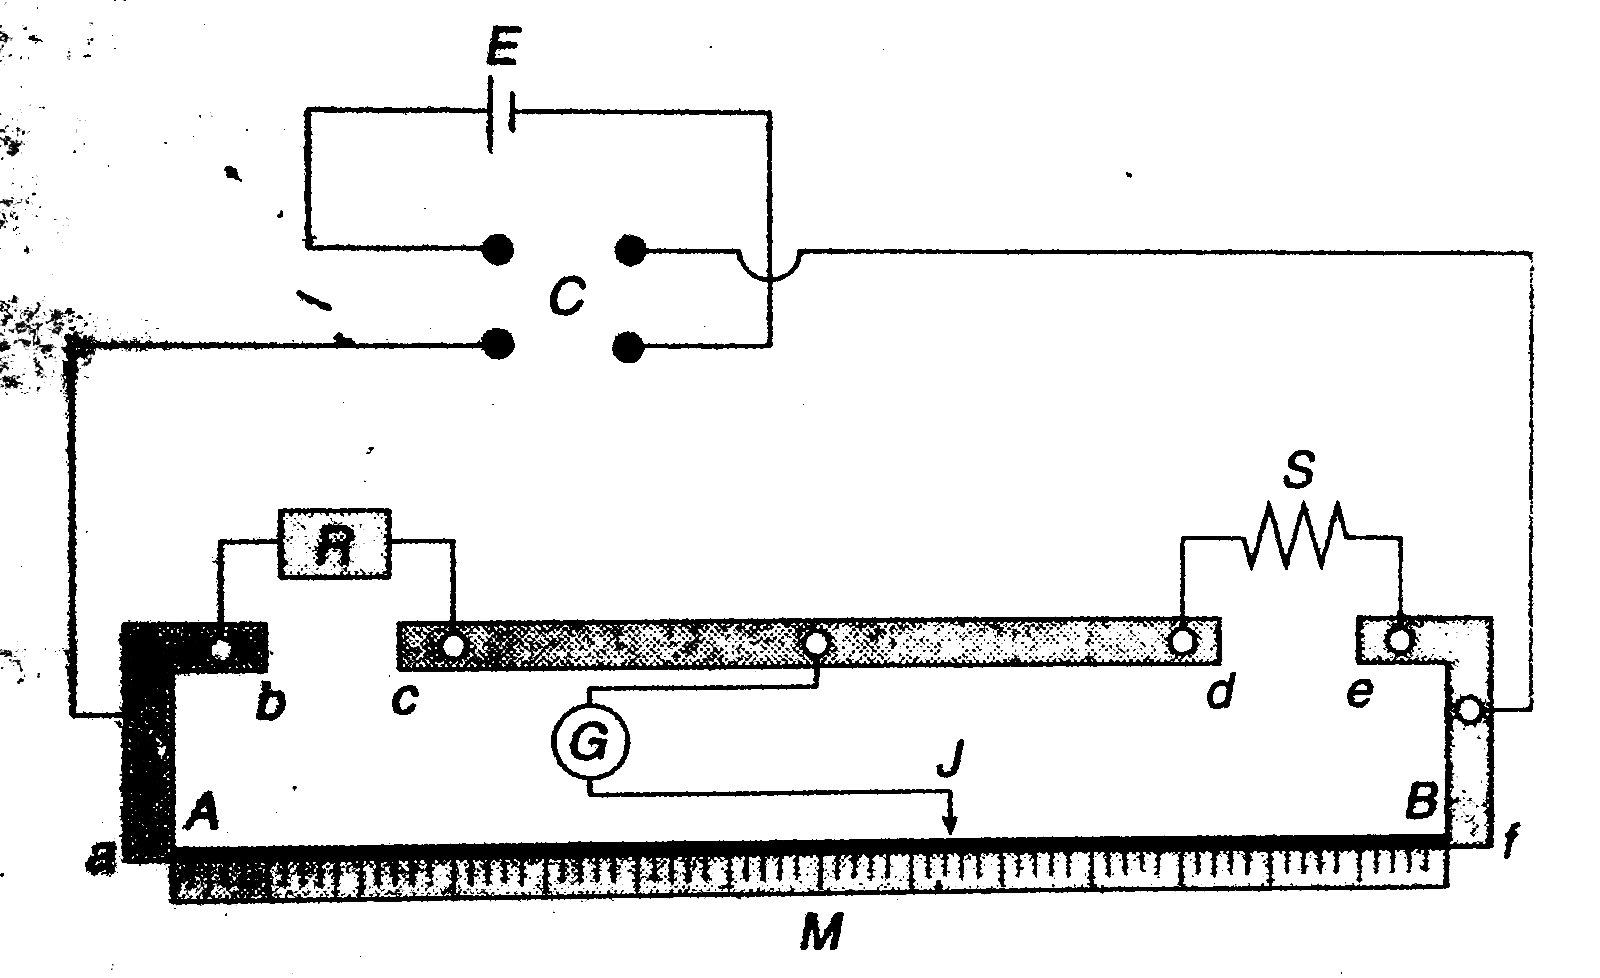 Diagram of a school-physics lab potentiometer, used in measurement purpose